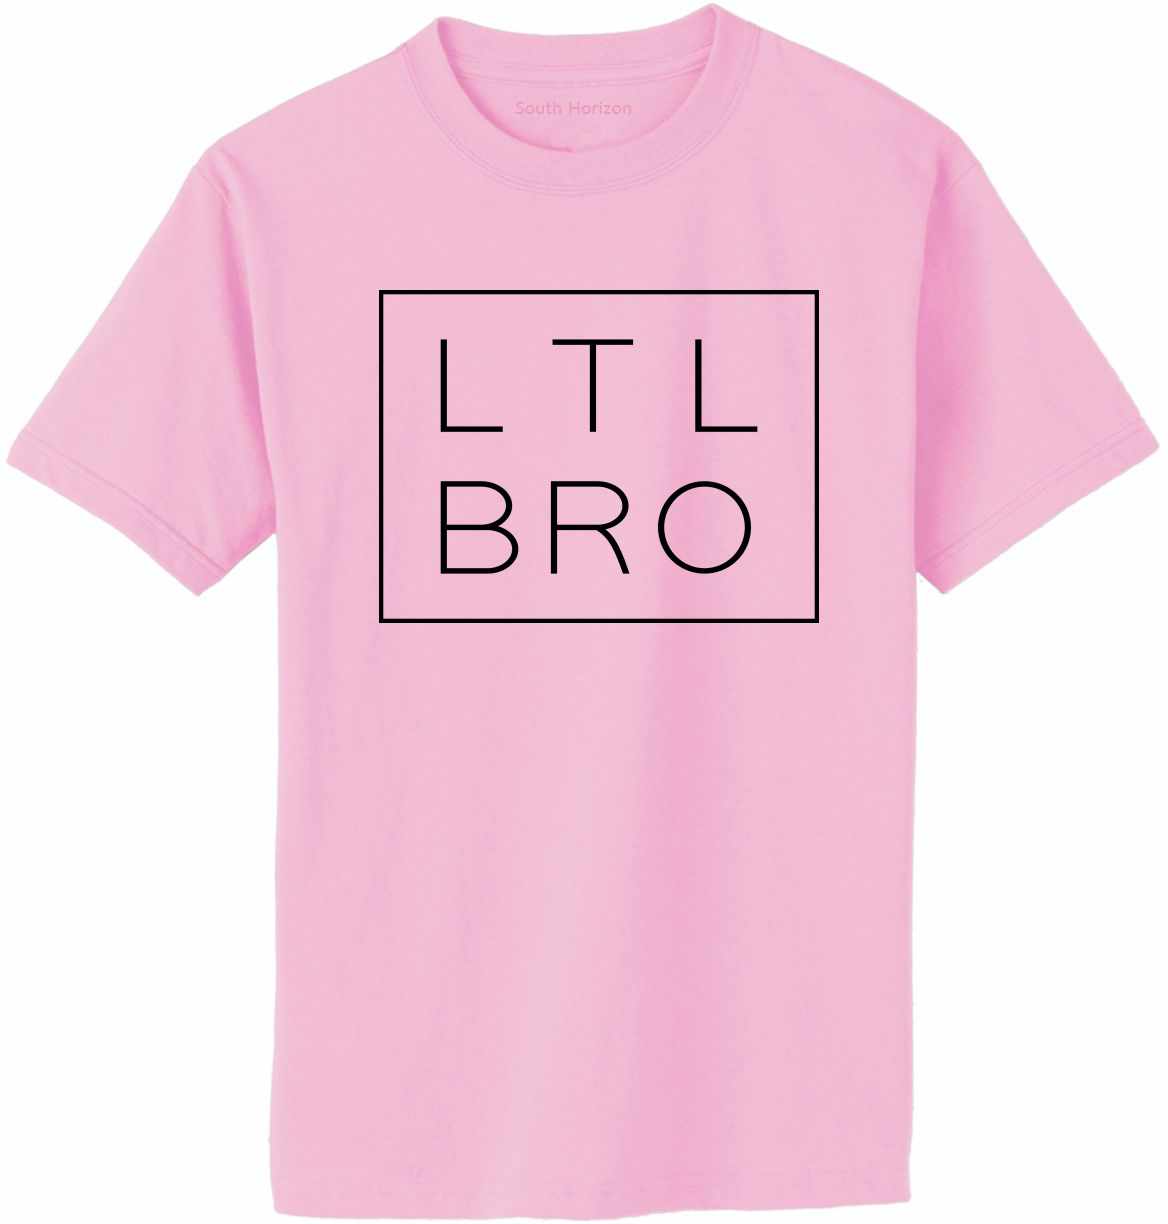 Little BRO - Box on Adult T-Shirt (#1255-1)